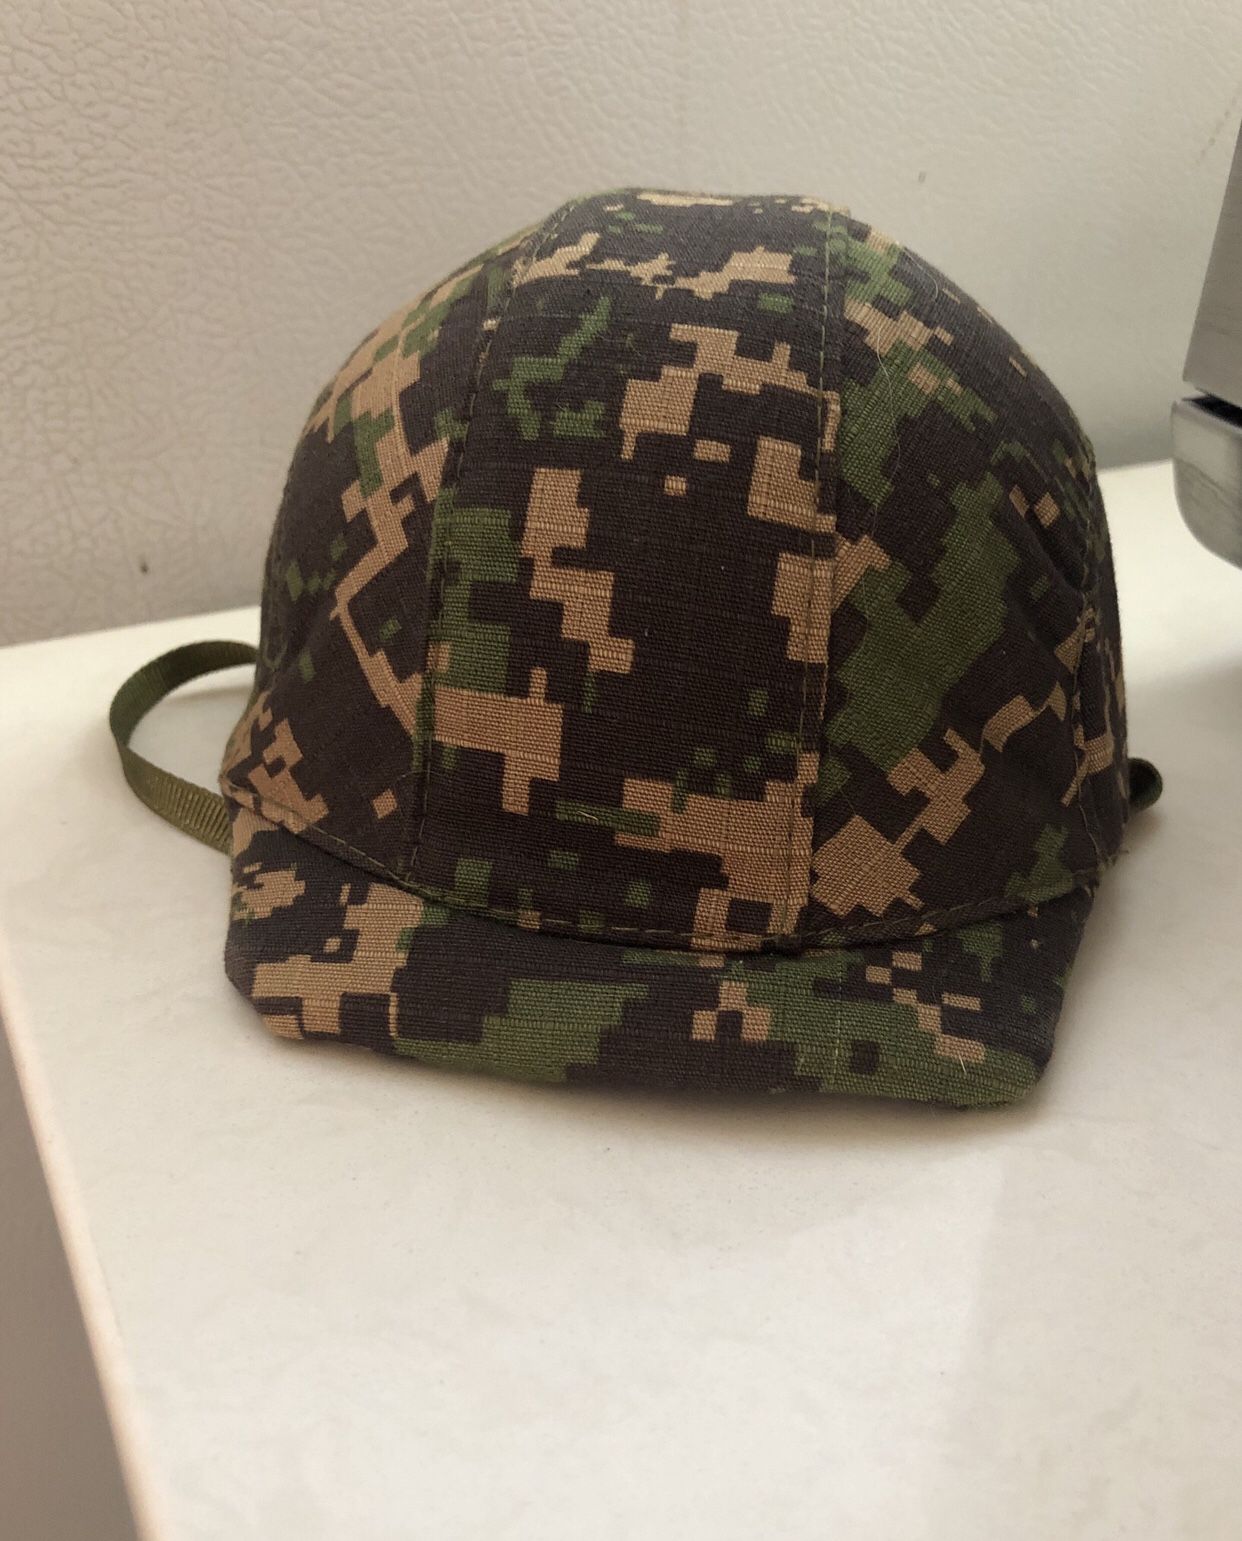 Build A Bear Workshop Camouflage Cap